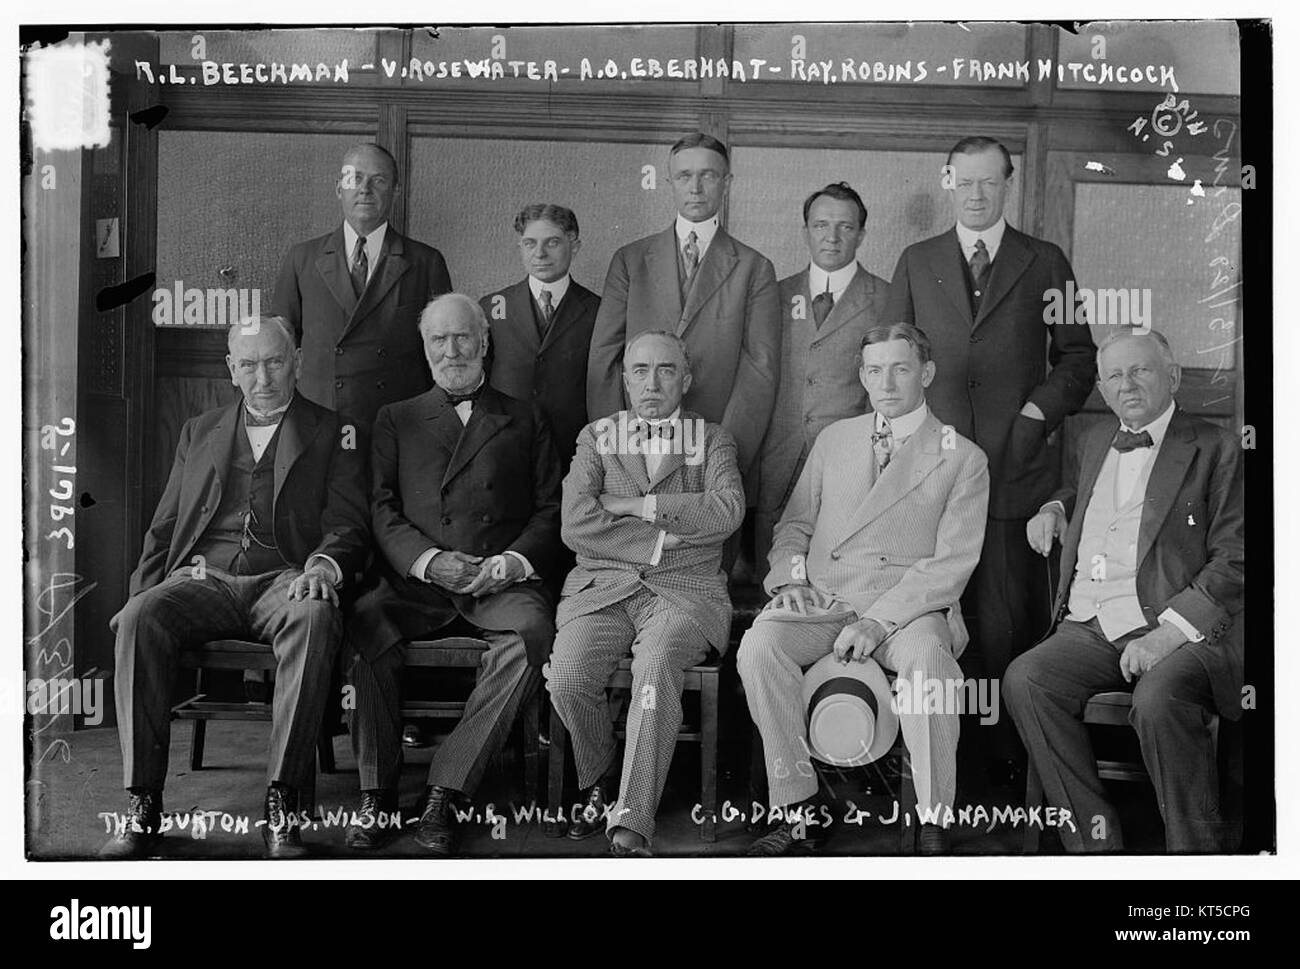 R.L. Beeckman, V. Rosenwasser, A.O. Eberhart, Ray. Robins, Frank Hitchcock, Der. Burton, Jos. Wilson, W.R. Willcox, C.G. Dawes, J. Wanamaker (14440811990) Stockfoto